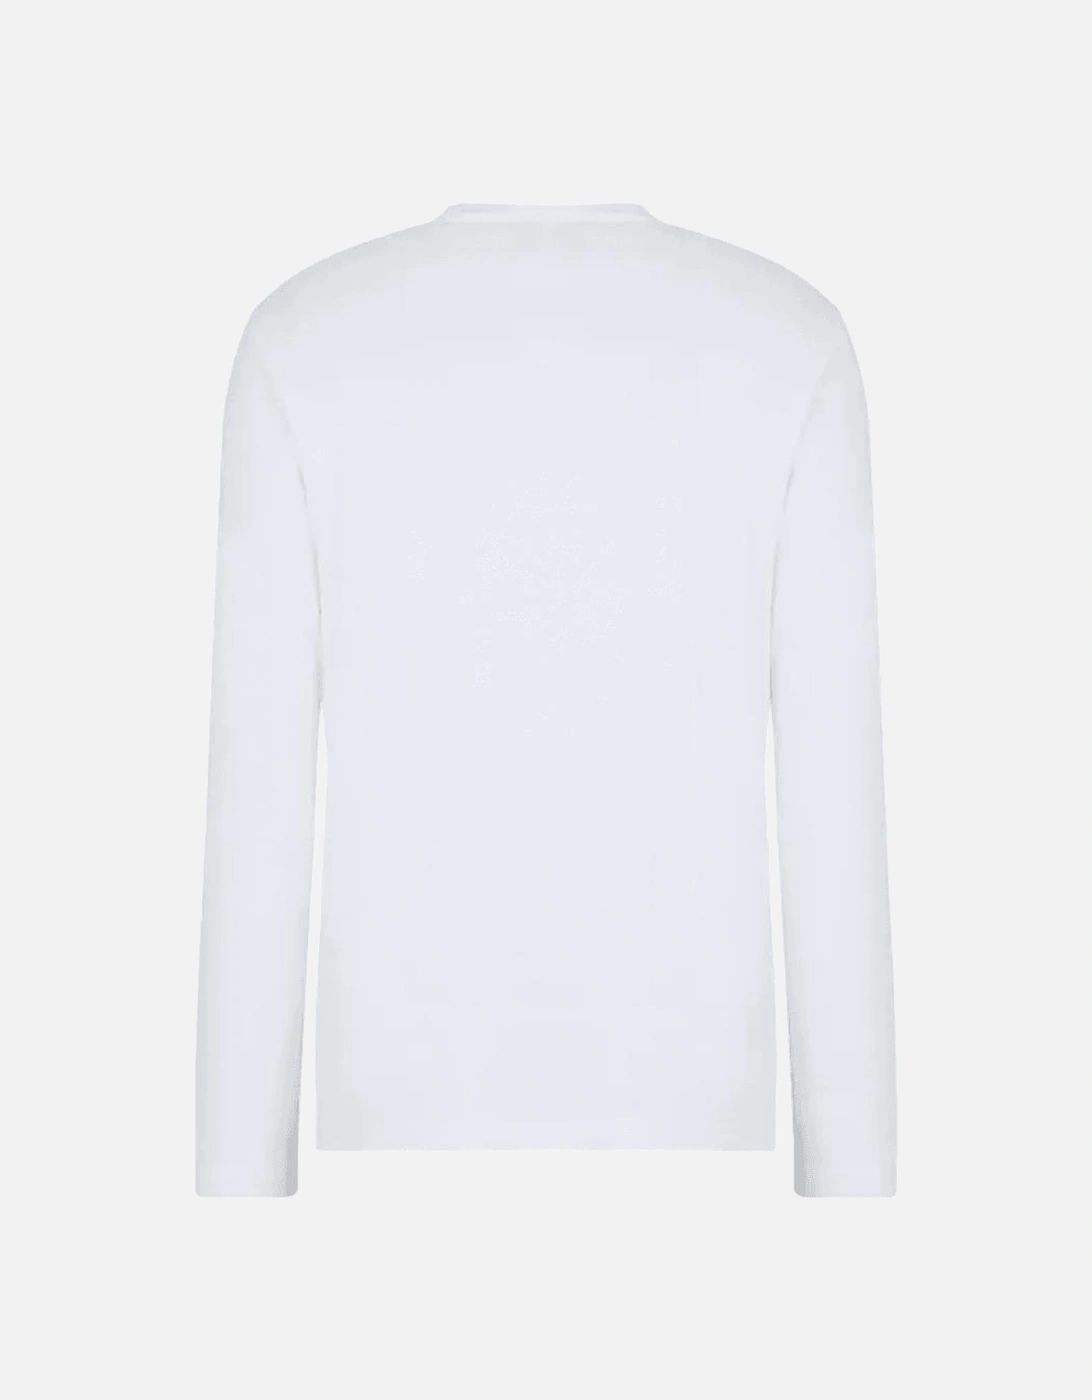 Cotton Viscose Long Sleeve White T-Shirt